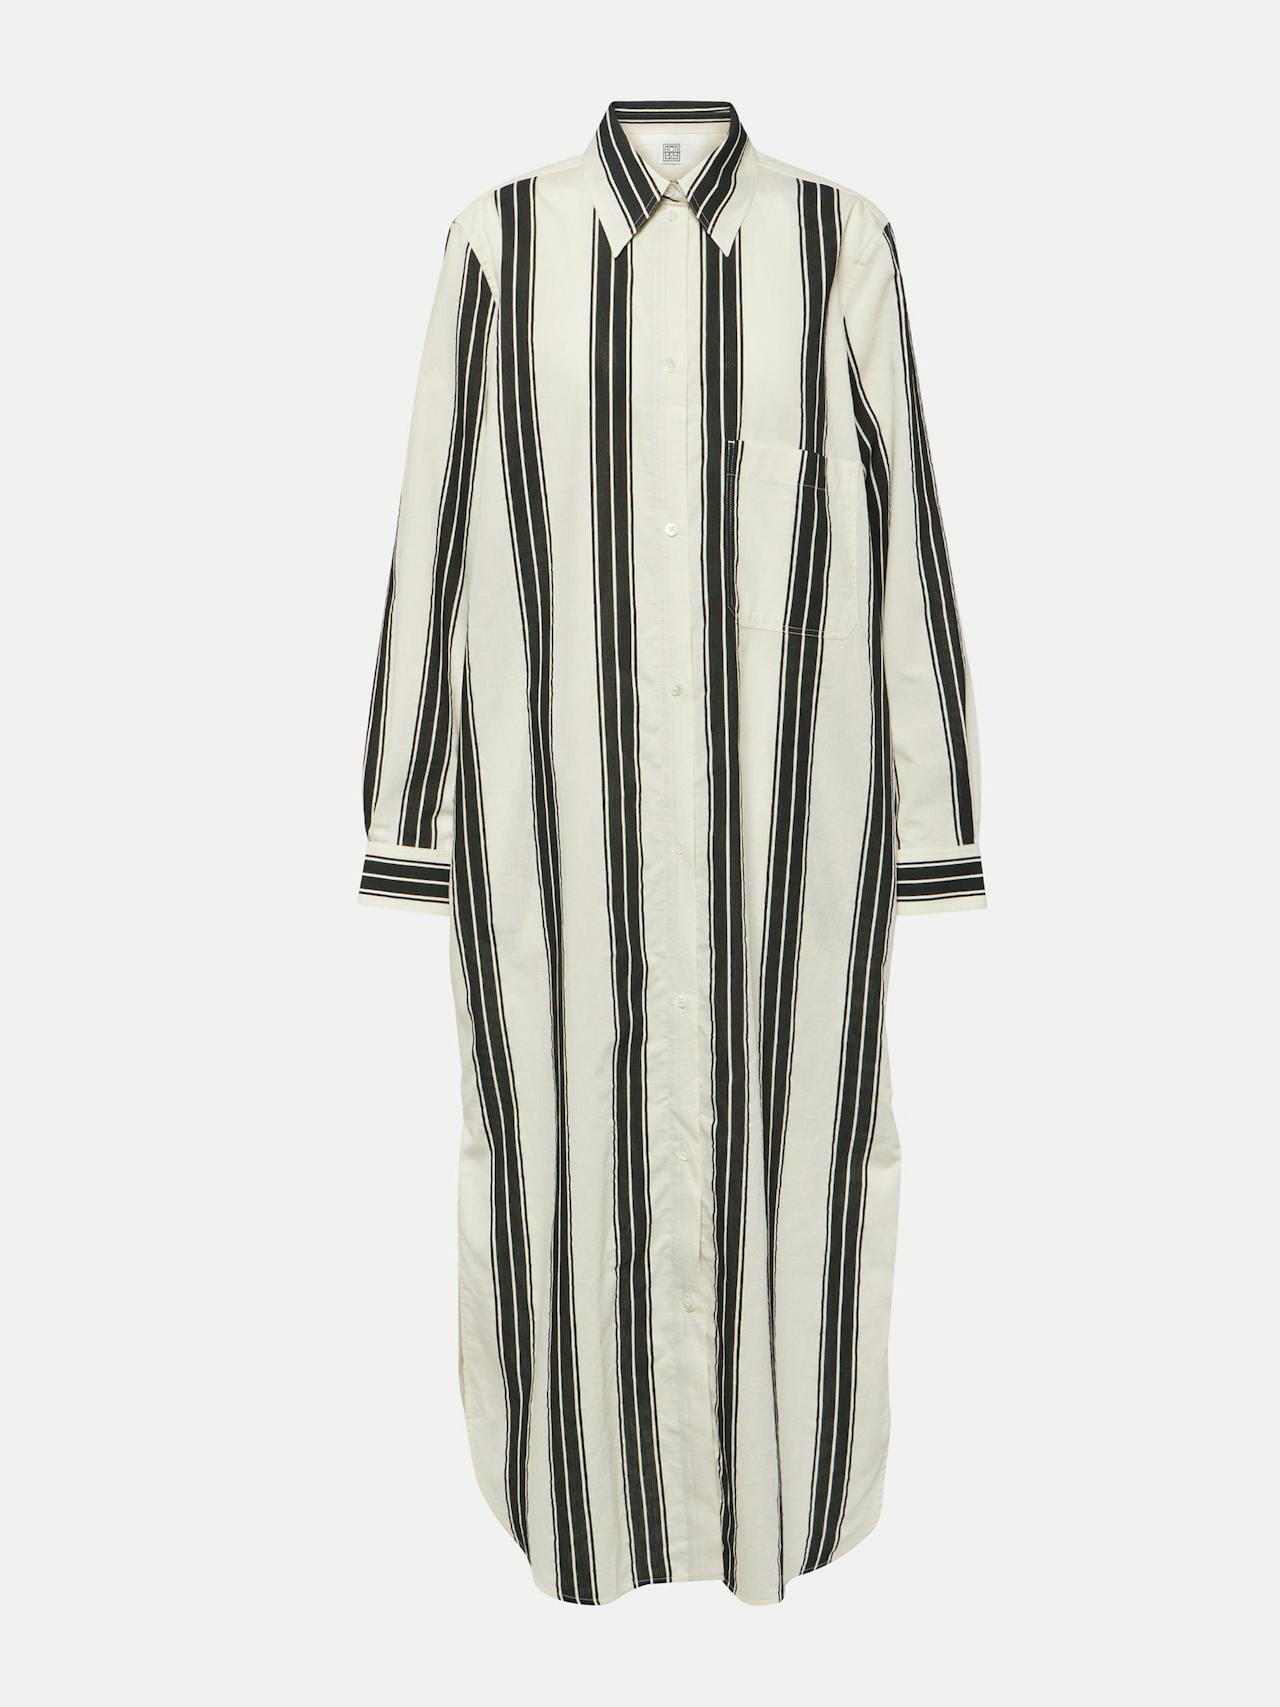 Jacquard striped cotton-blend shirt dress